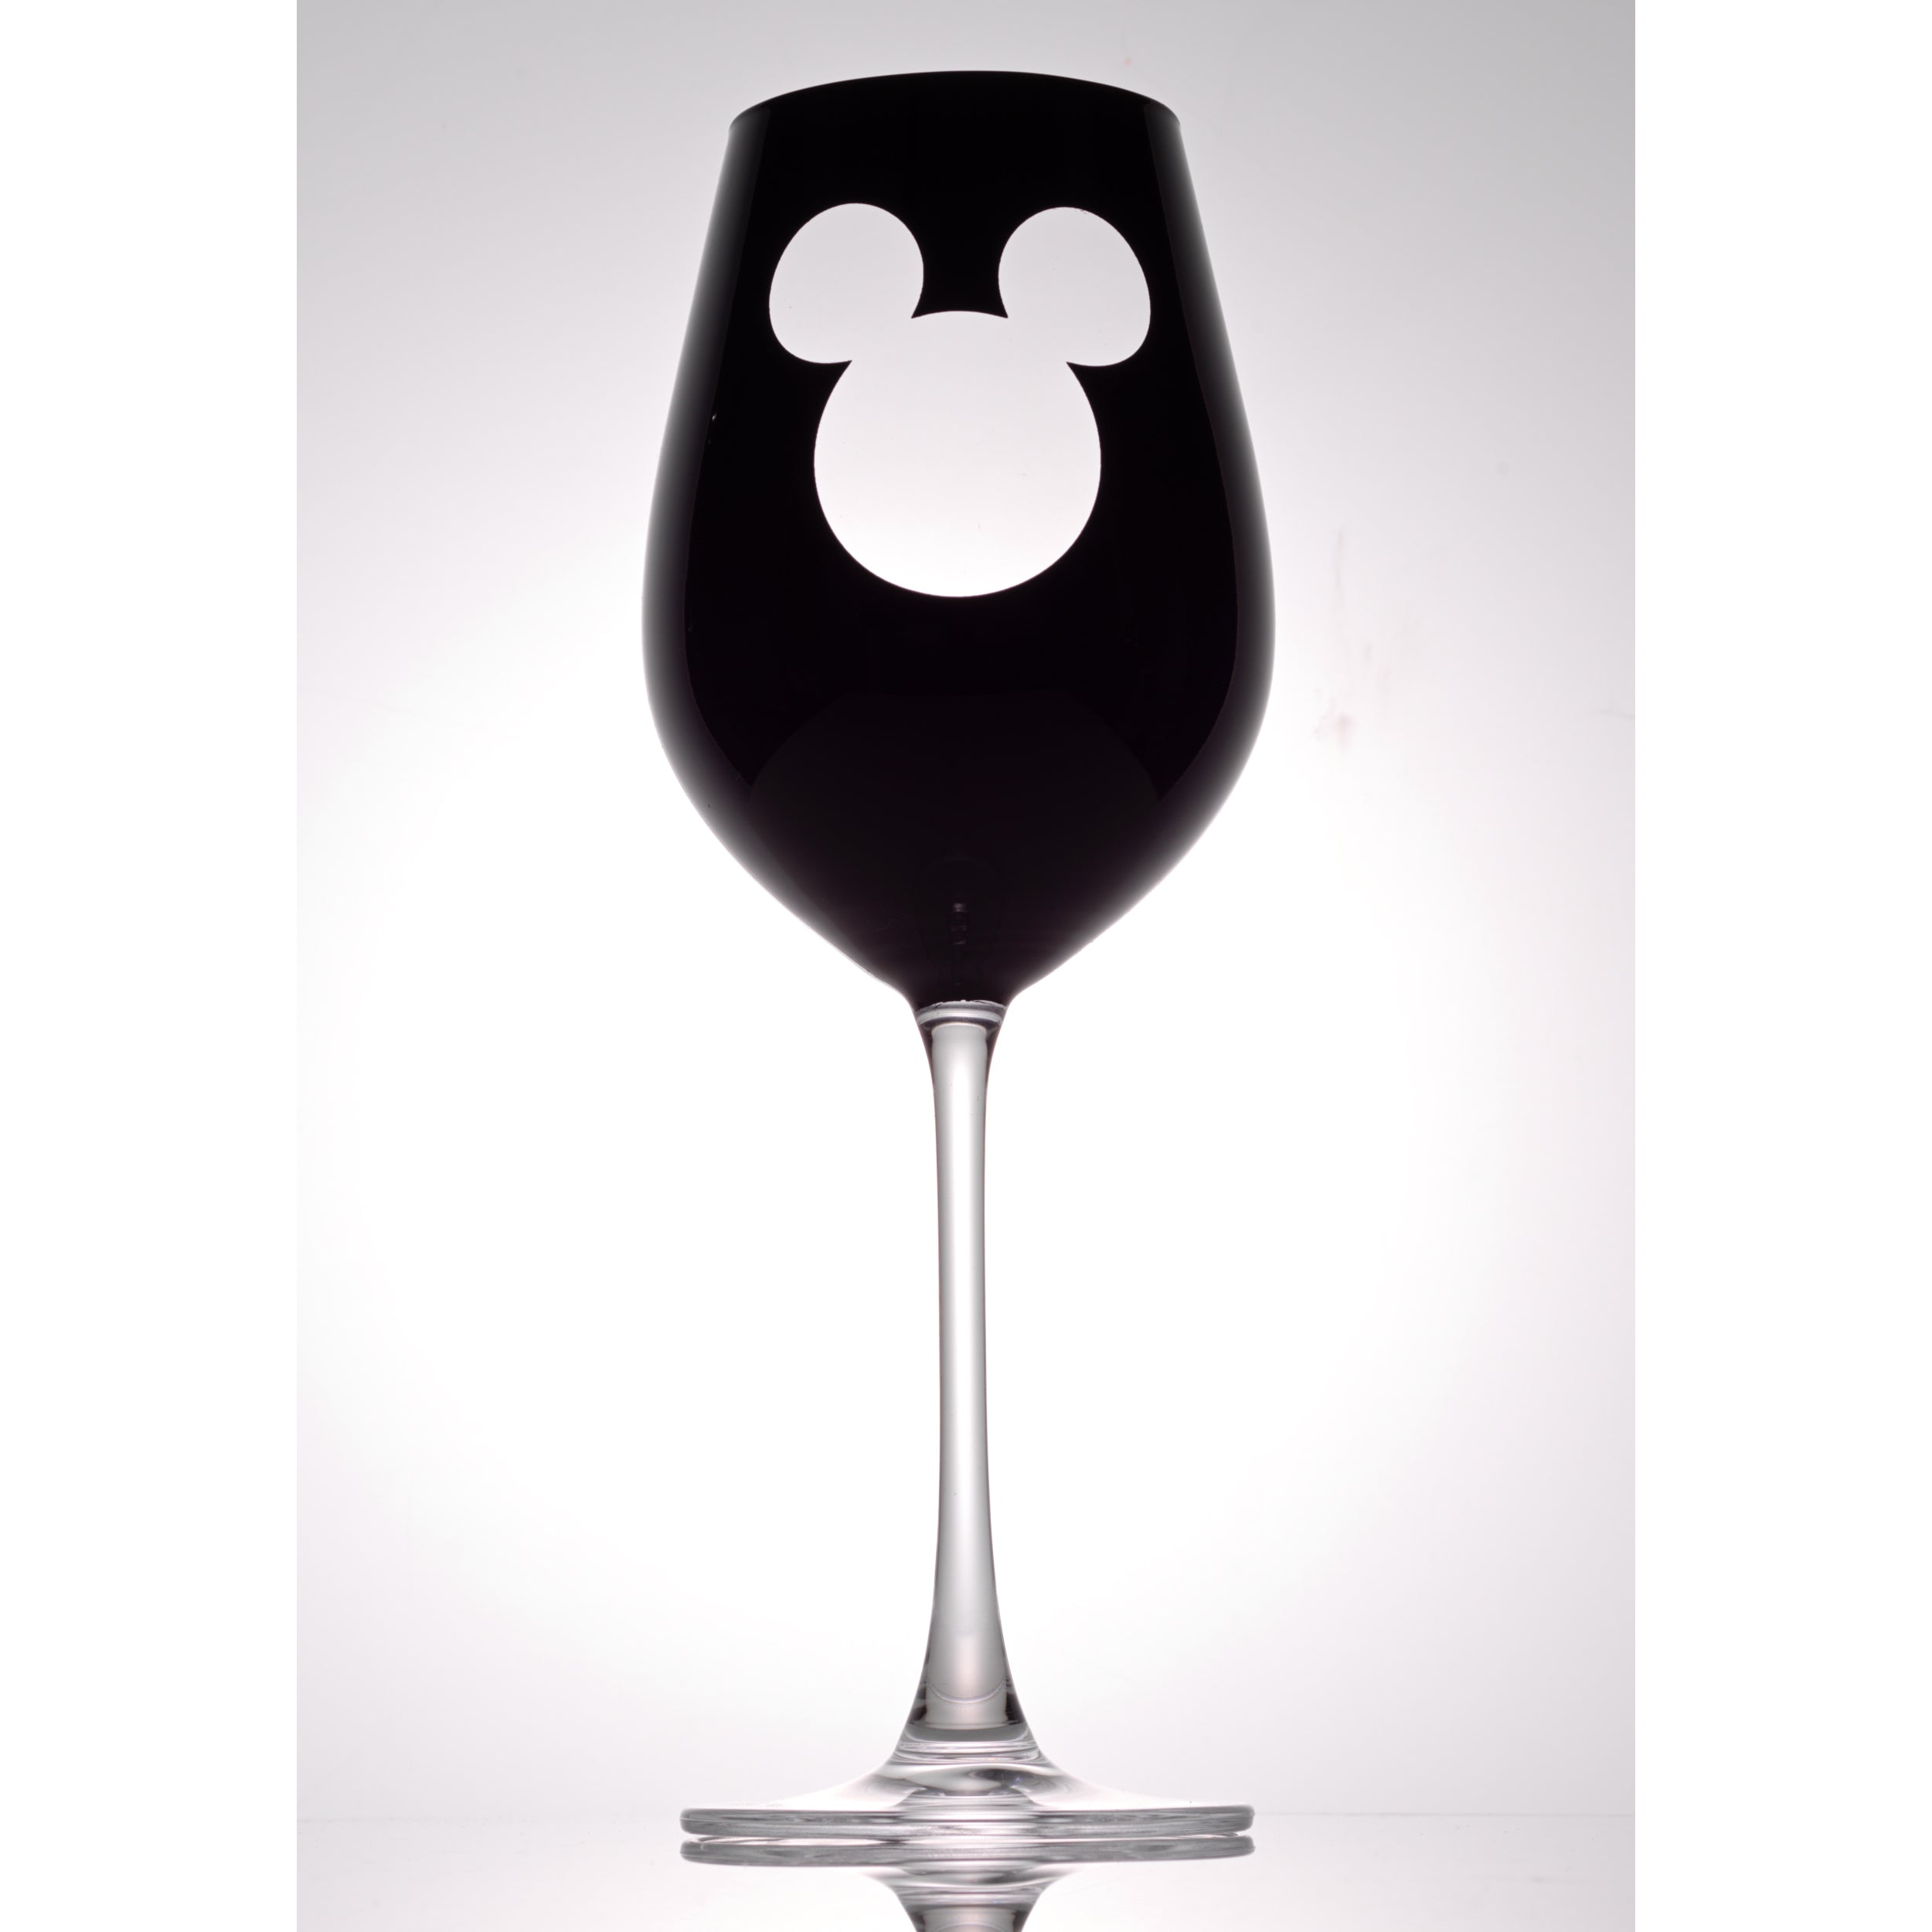 Disney Luxury Mickey Mouse Crystal Stemmed White Glasses - 16 oz - Set of 2